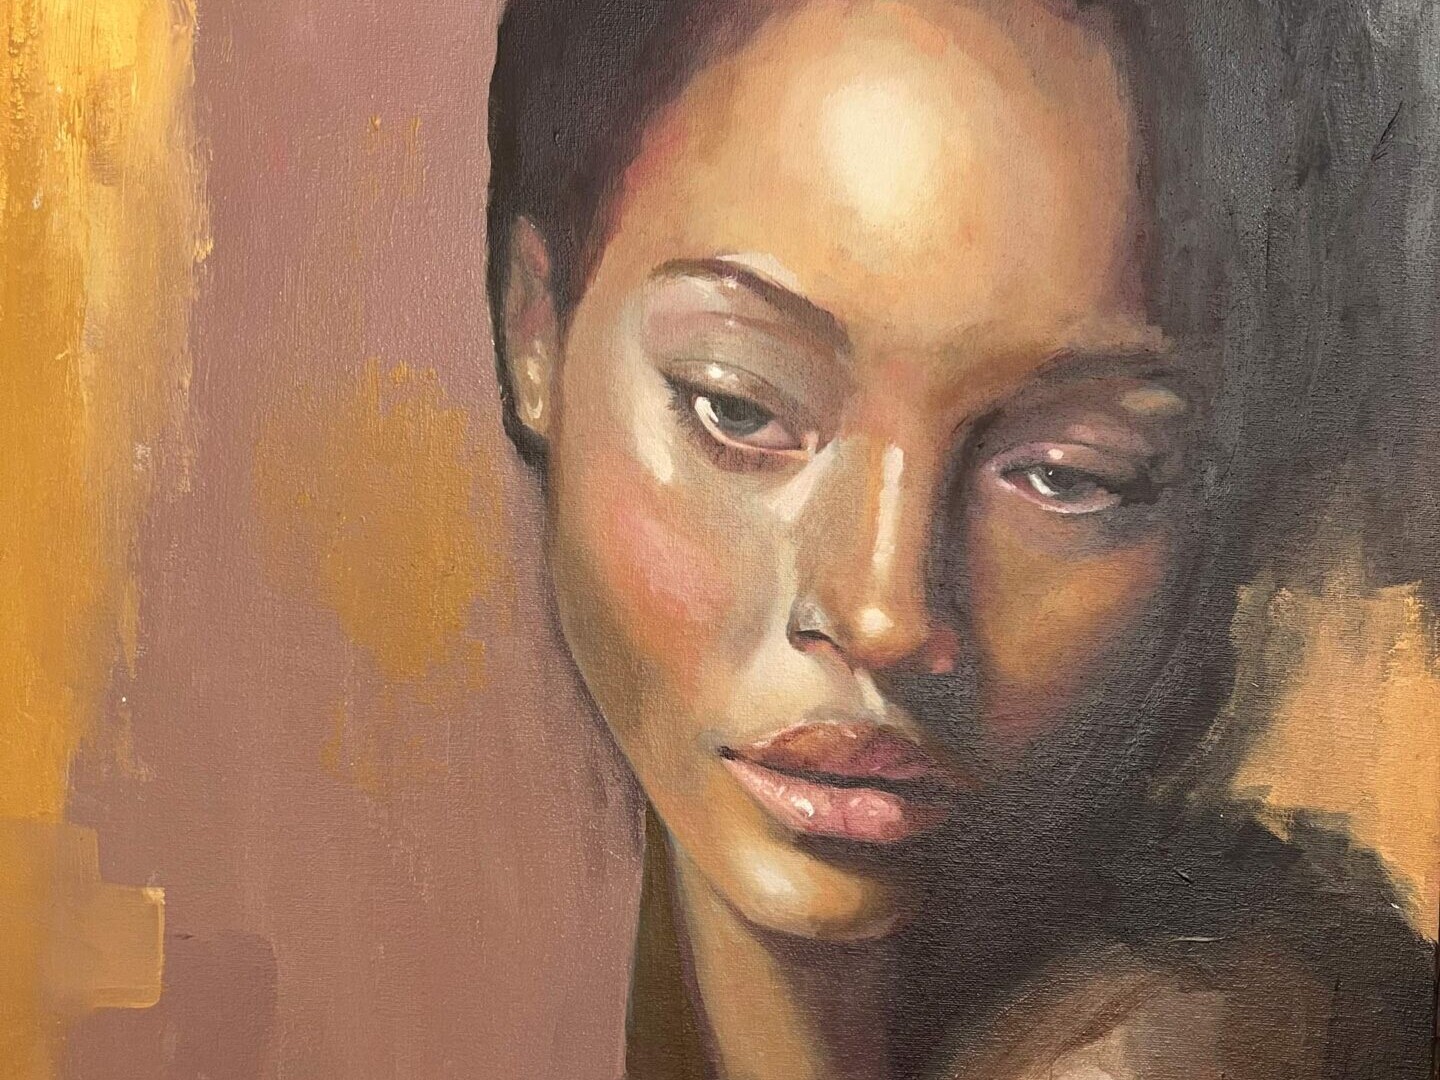 alex righetto black woman painting uai